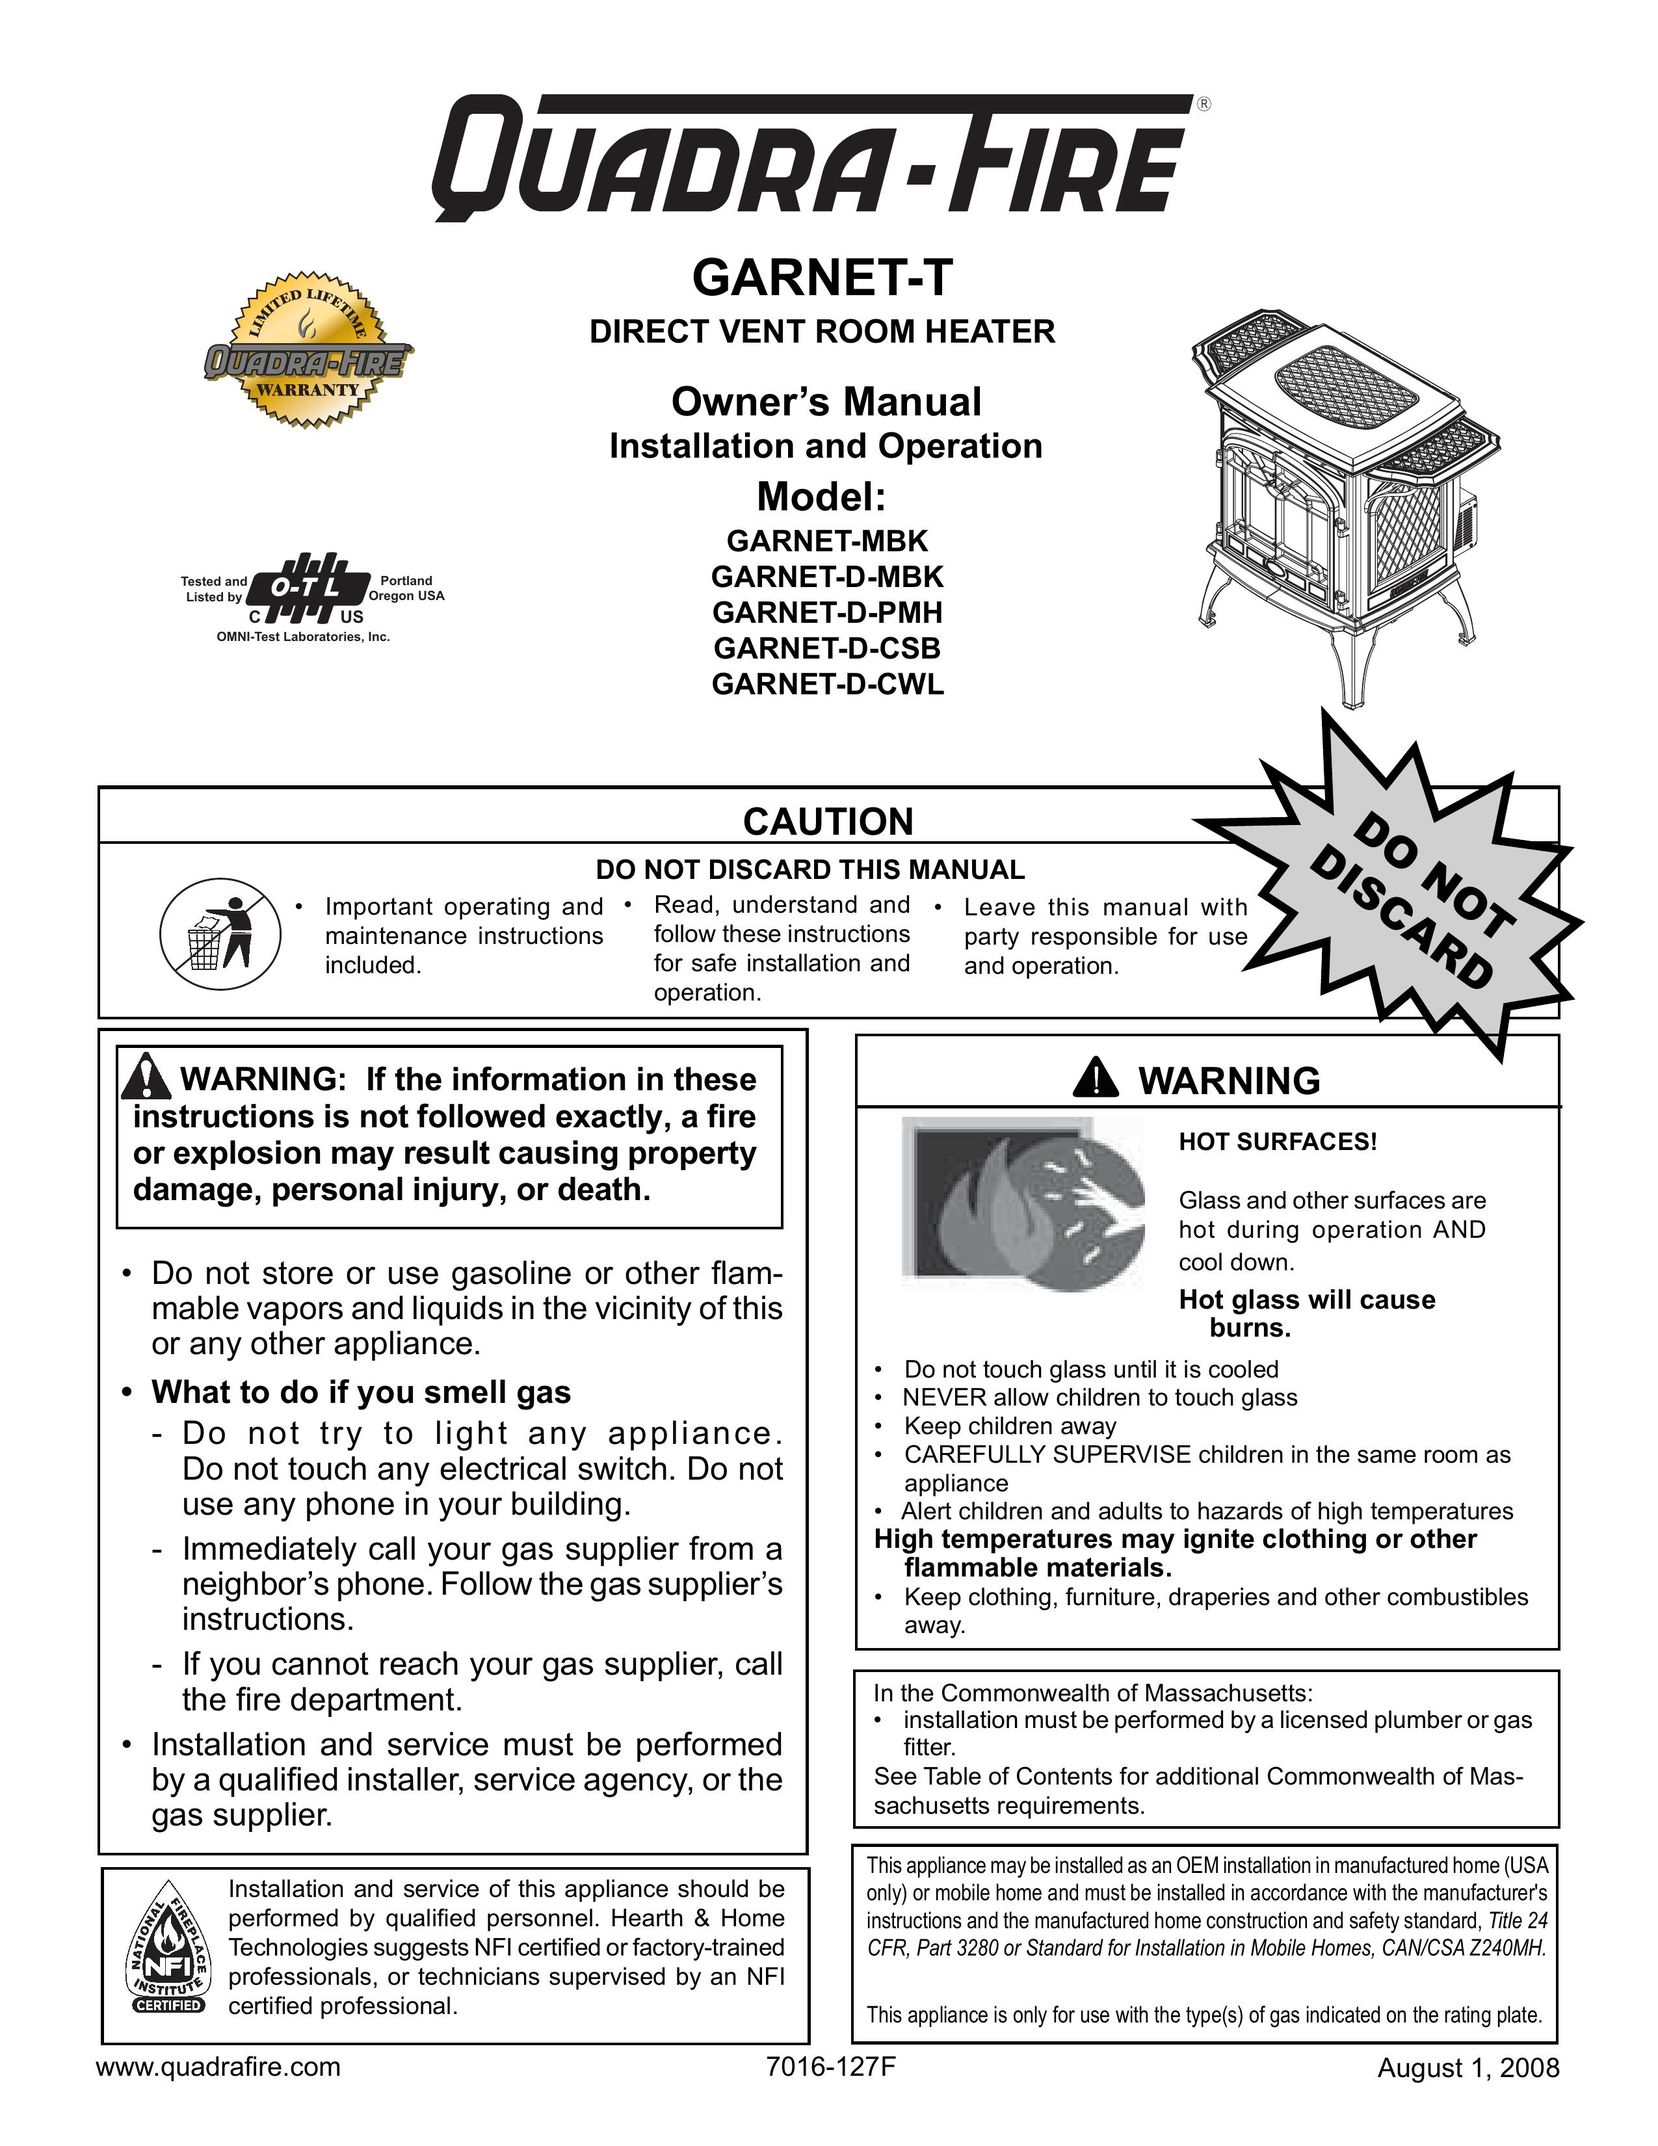 Quadra-Fire GARNET-MBK Electric Heater User Manual